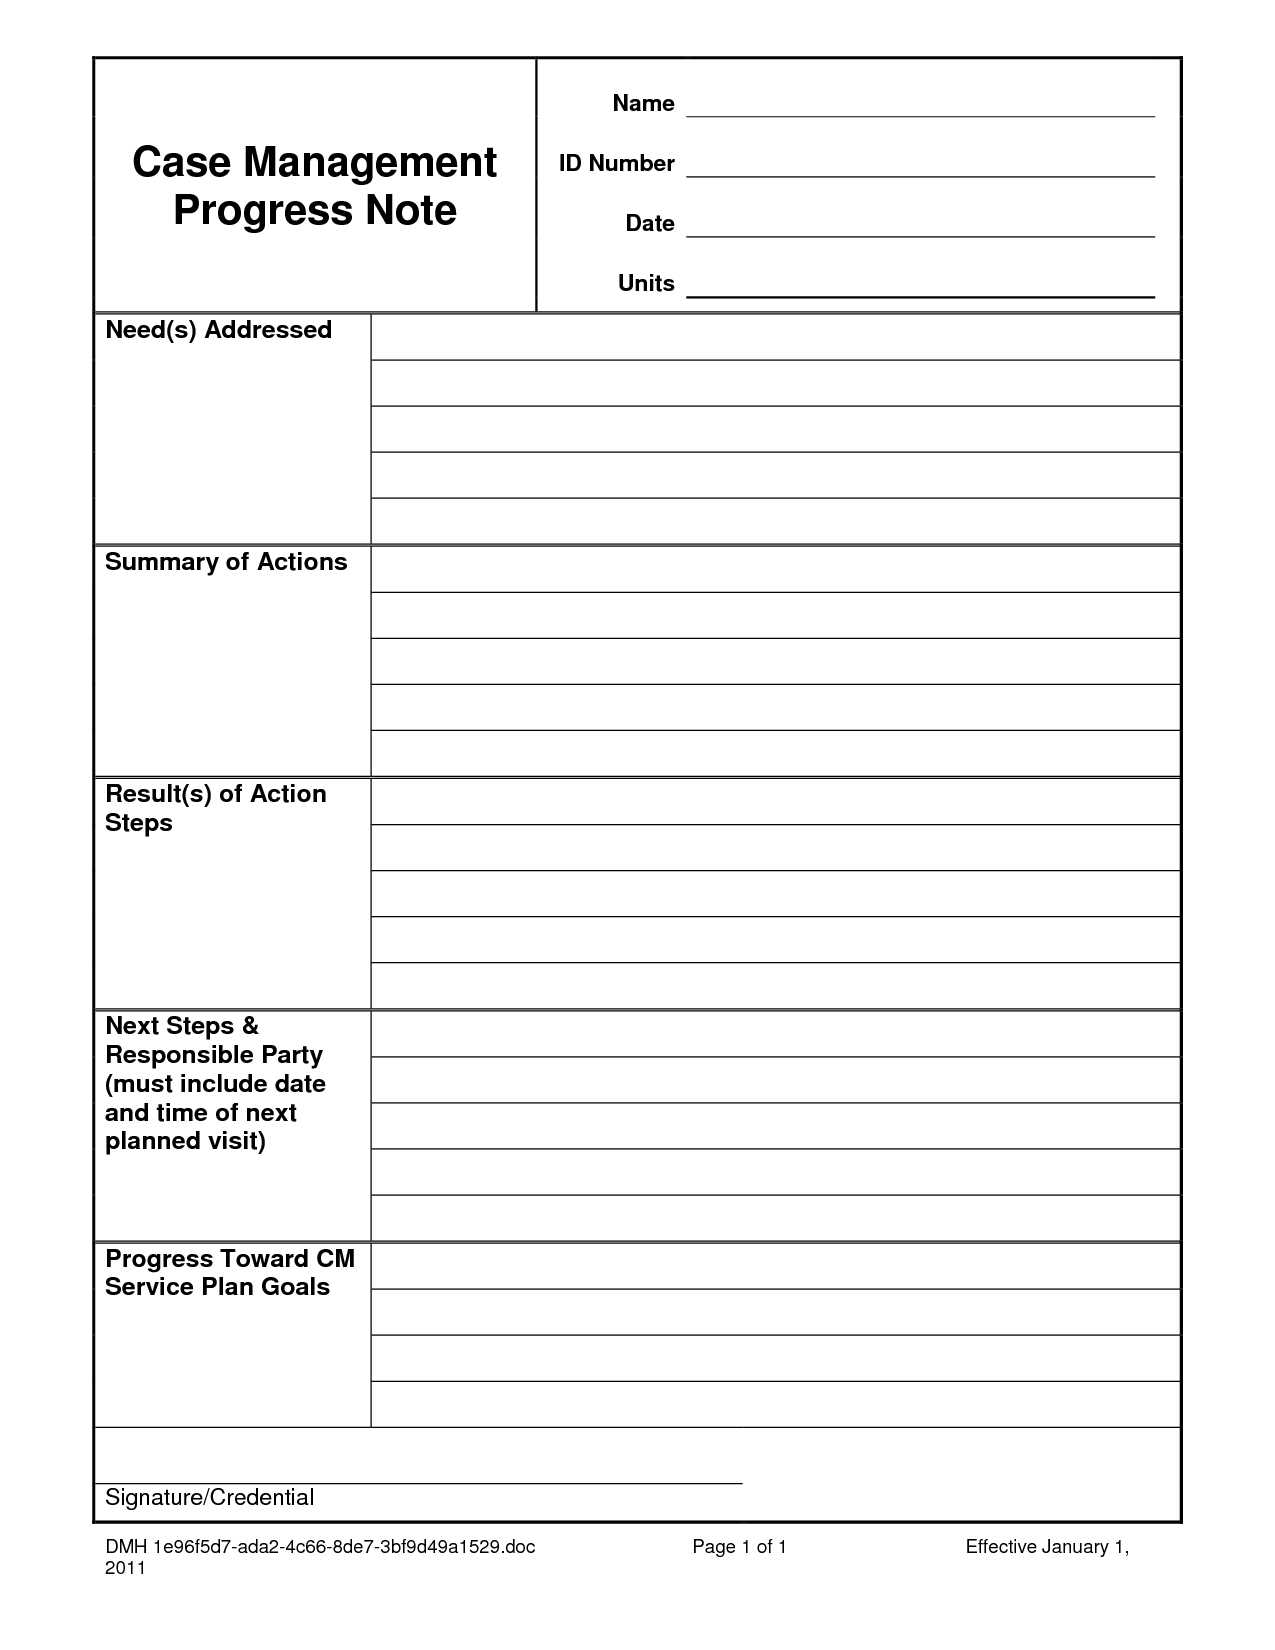 Positive Psychology Worksheets with Case Notes Template Case Management Progress Note Doc